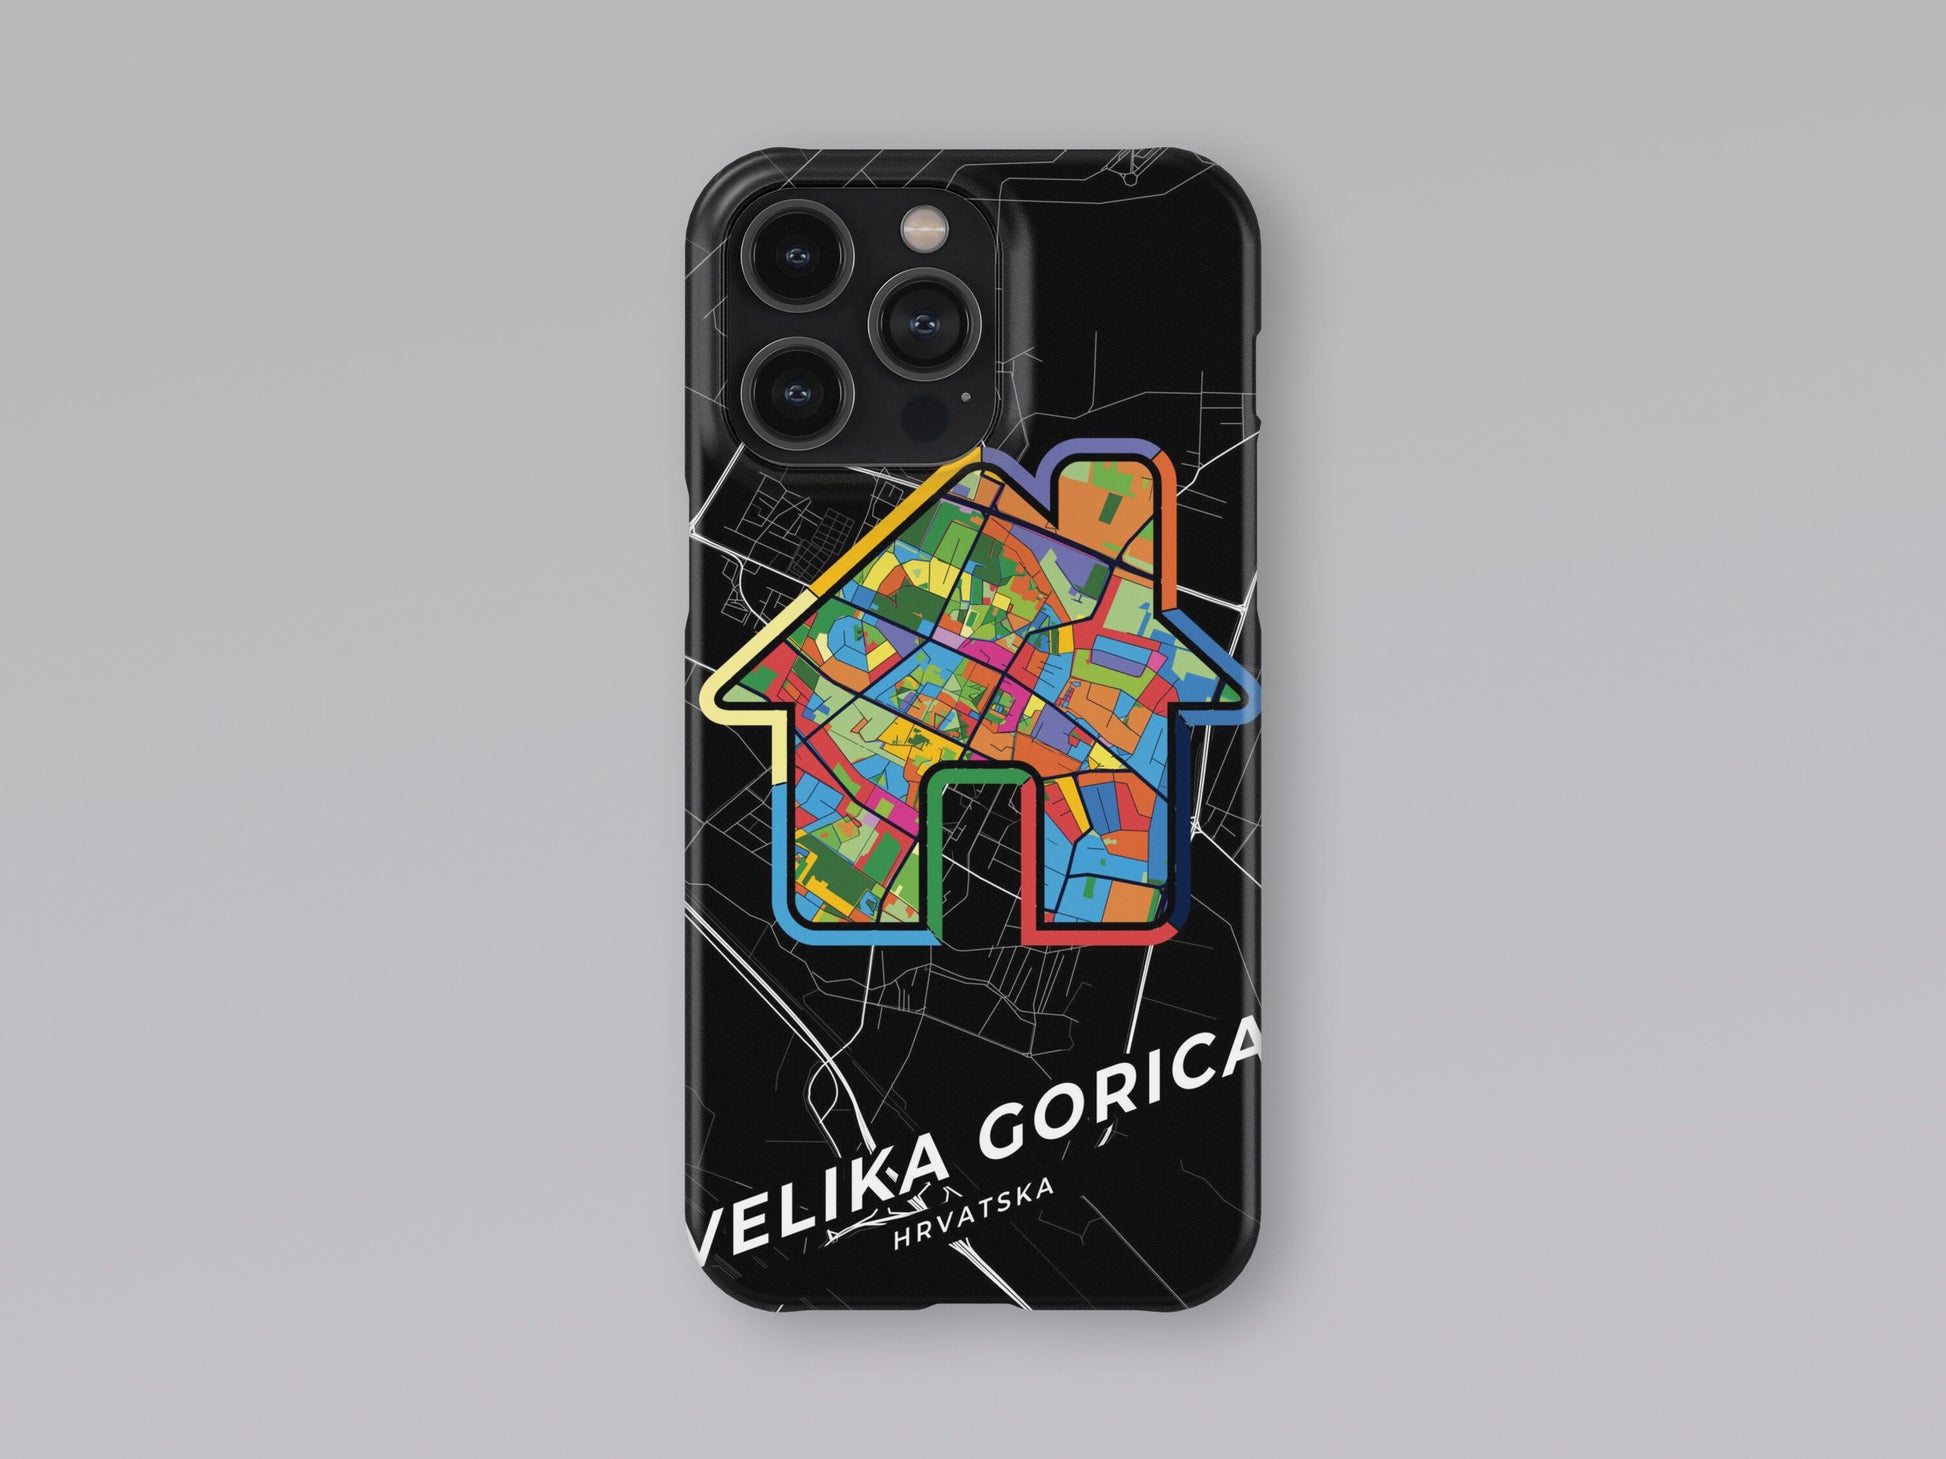 Velika Gorica Hrvatska slim phone case with colorful icon. Birthday, wedding or housewarming gift. Couple match cases. 3